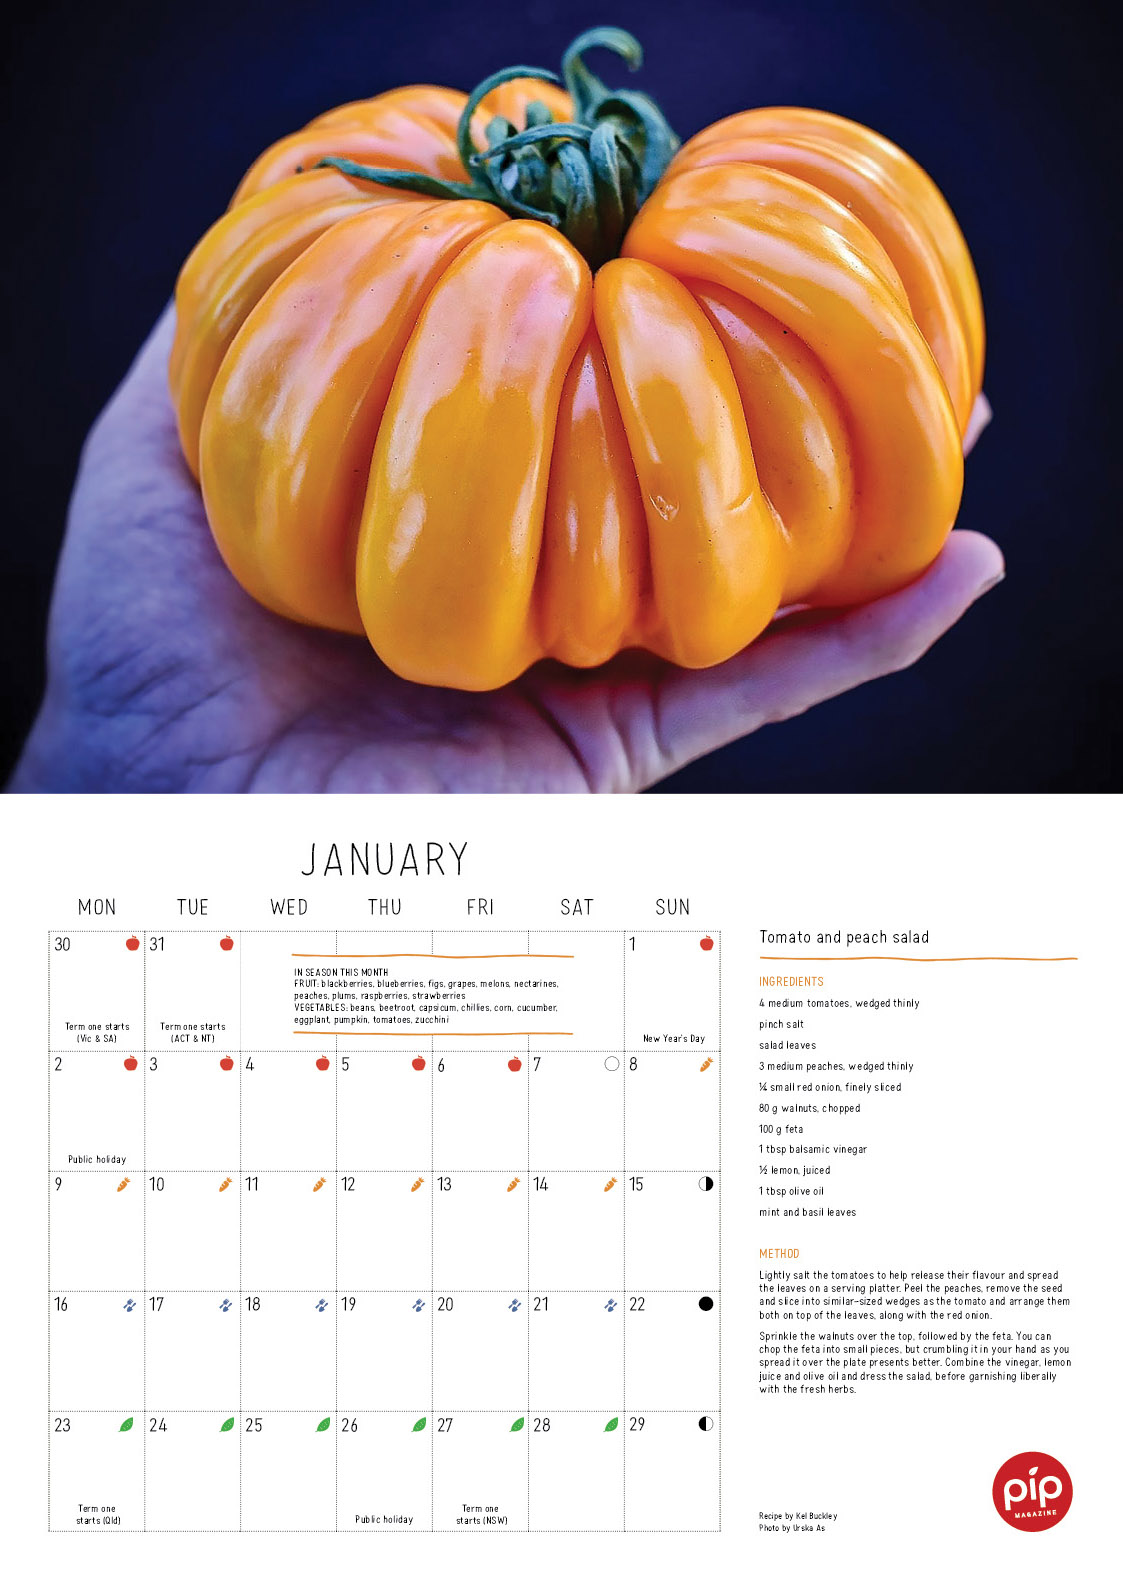 Print Subscription with Kitchen Garden Calendar Pip Magazine